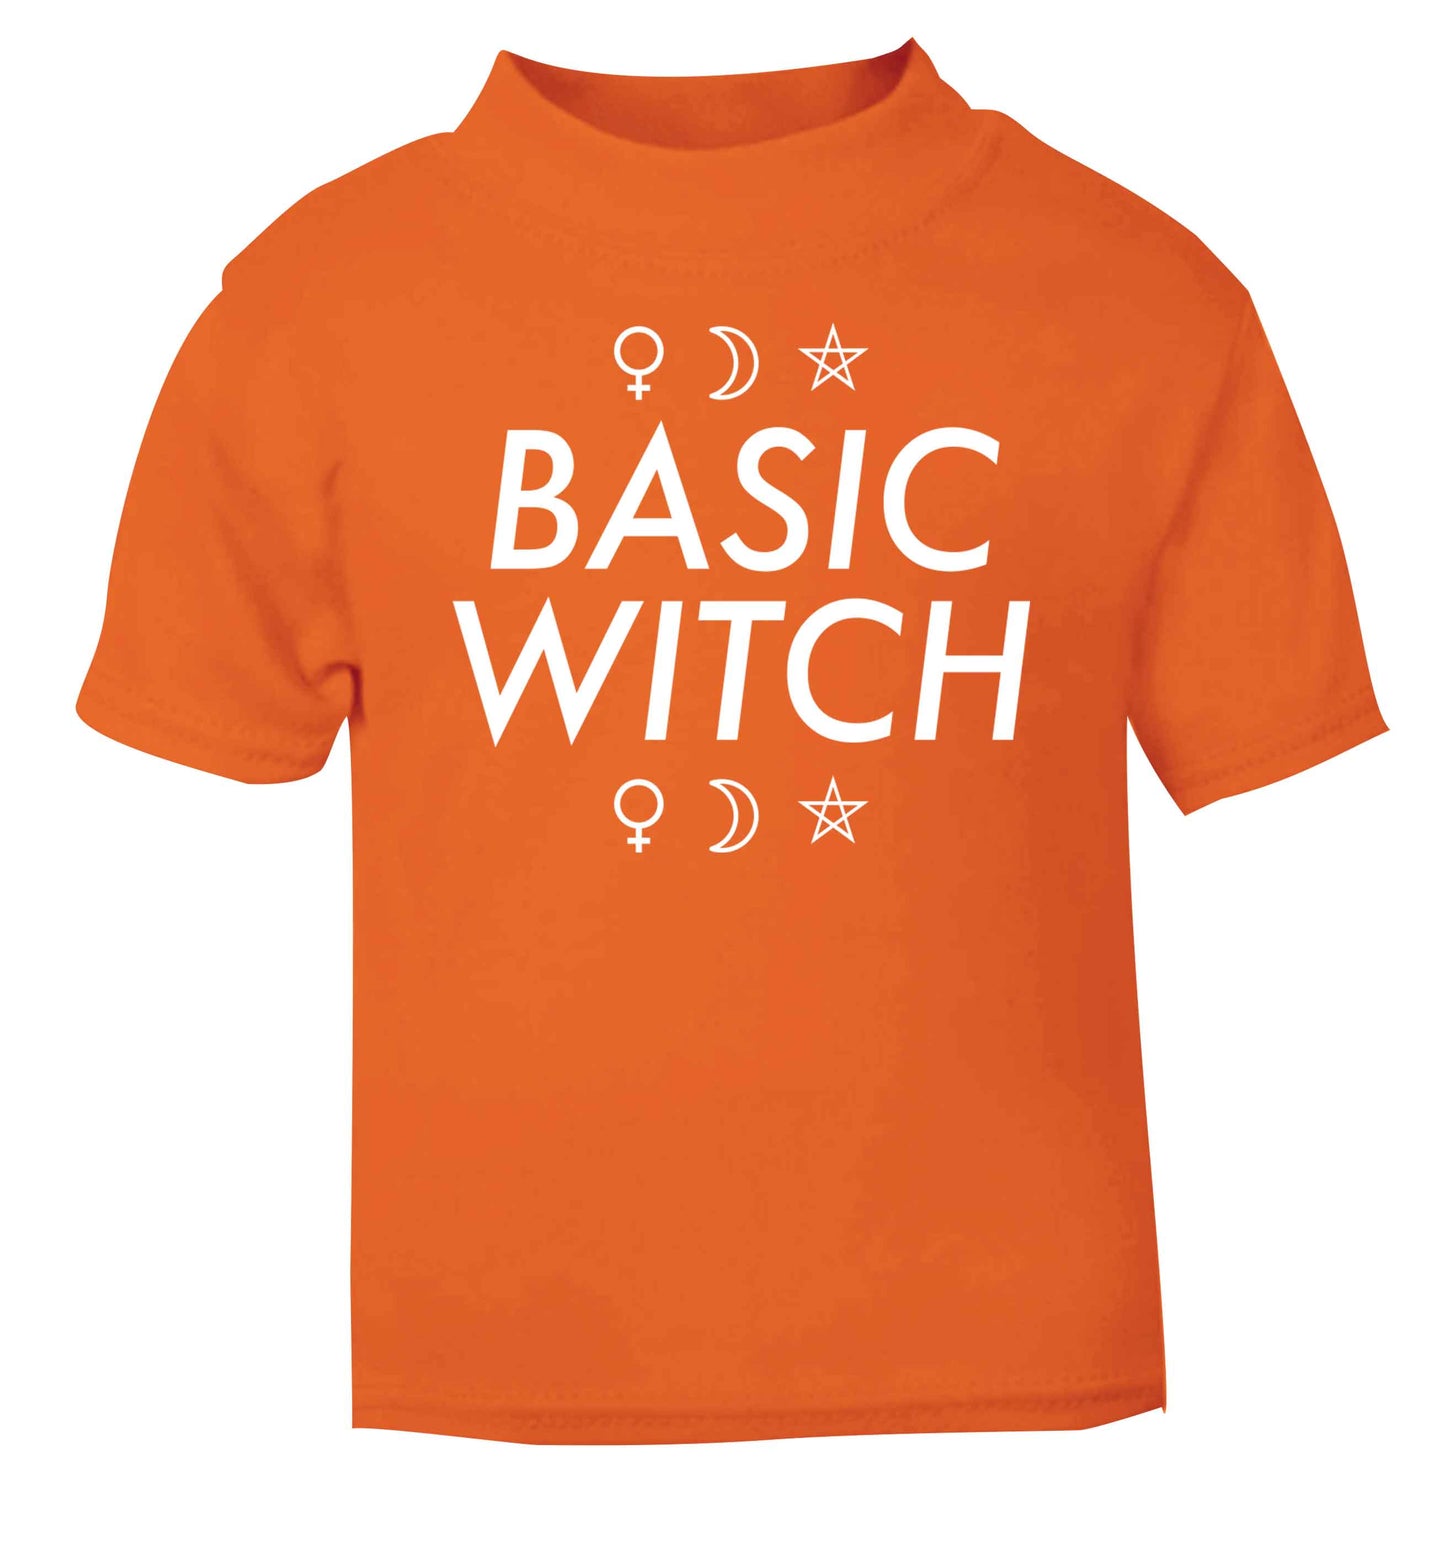 Basic witch 1 orange baby toddler Tshirt 2 Years